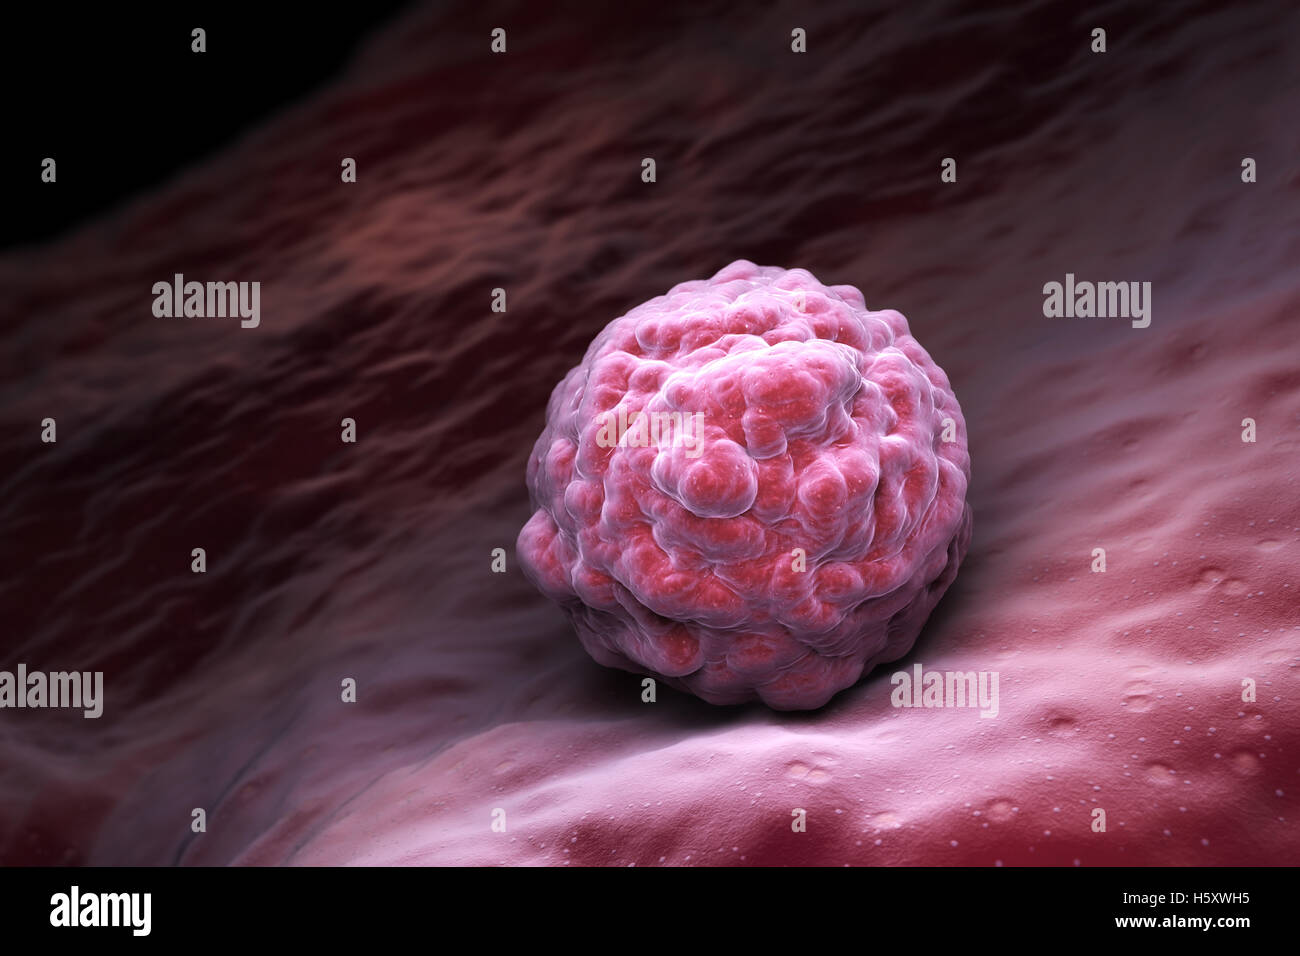 Embryonic stem cells , Cellular therapy , Regeneration , Disease treatment. 3D illustration Stock Photo